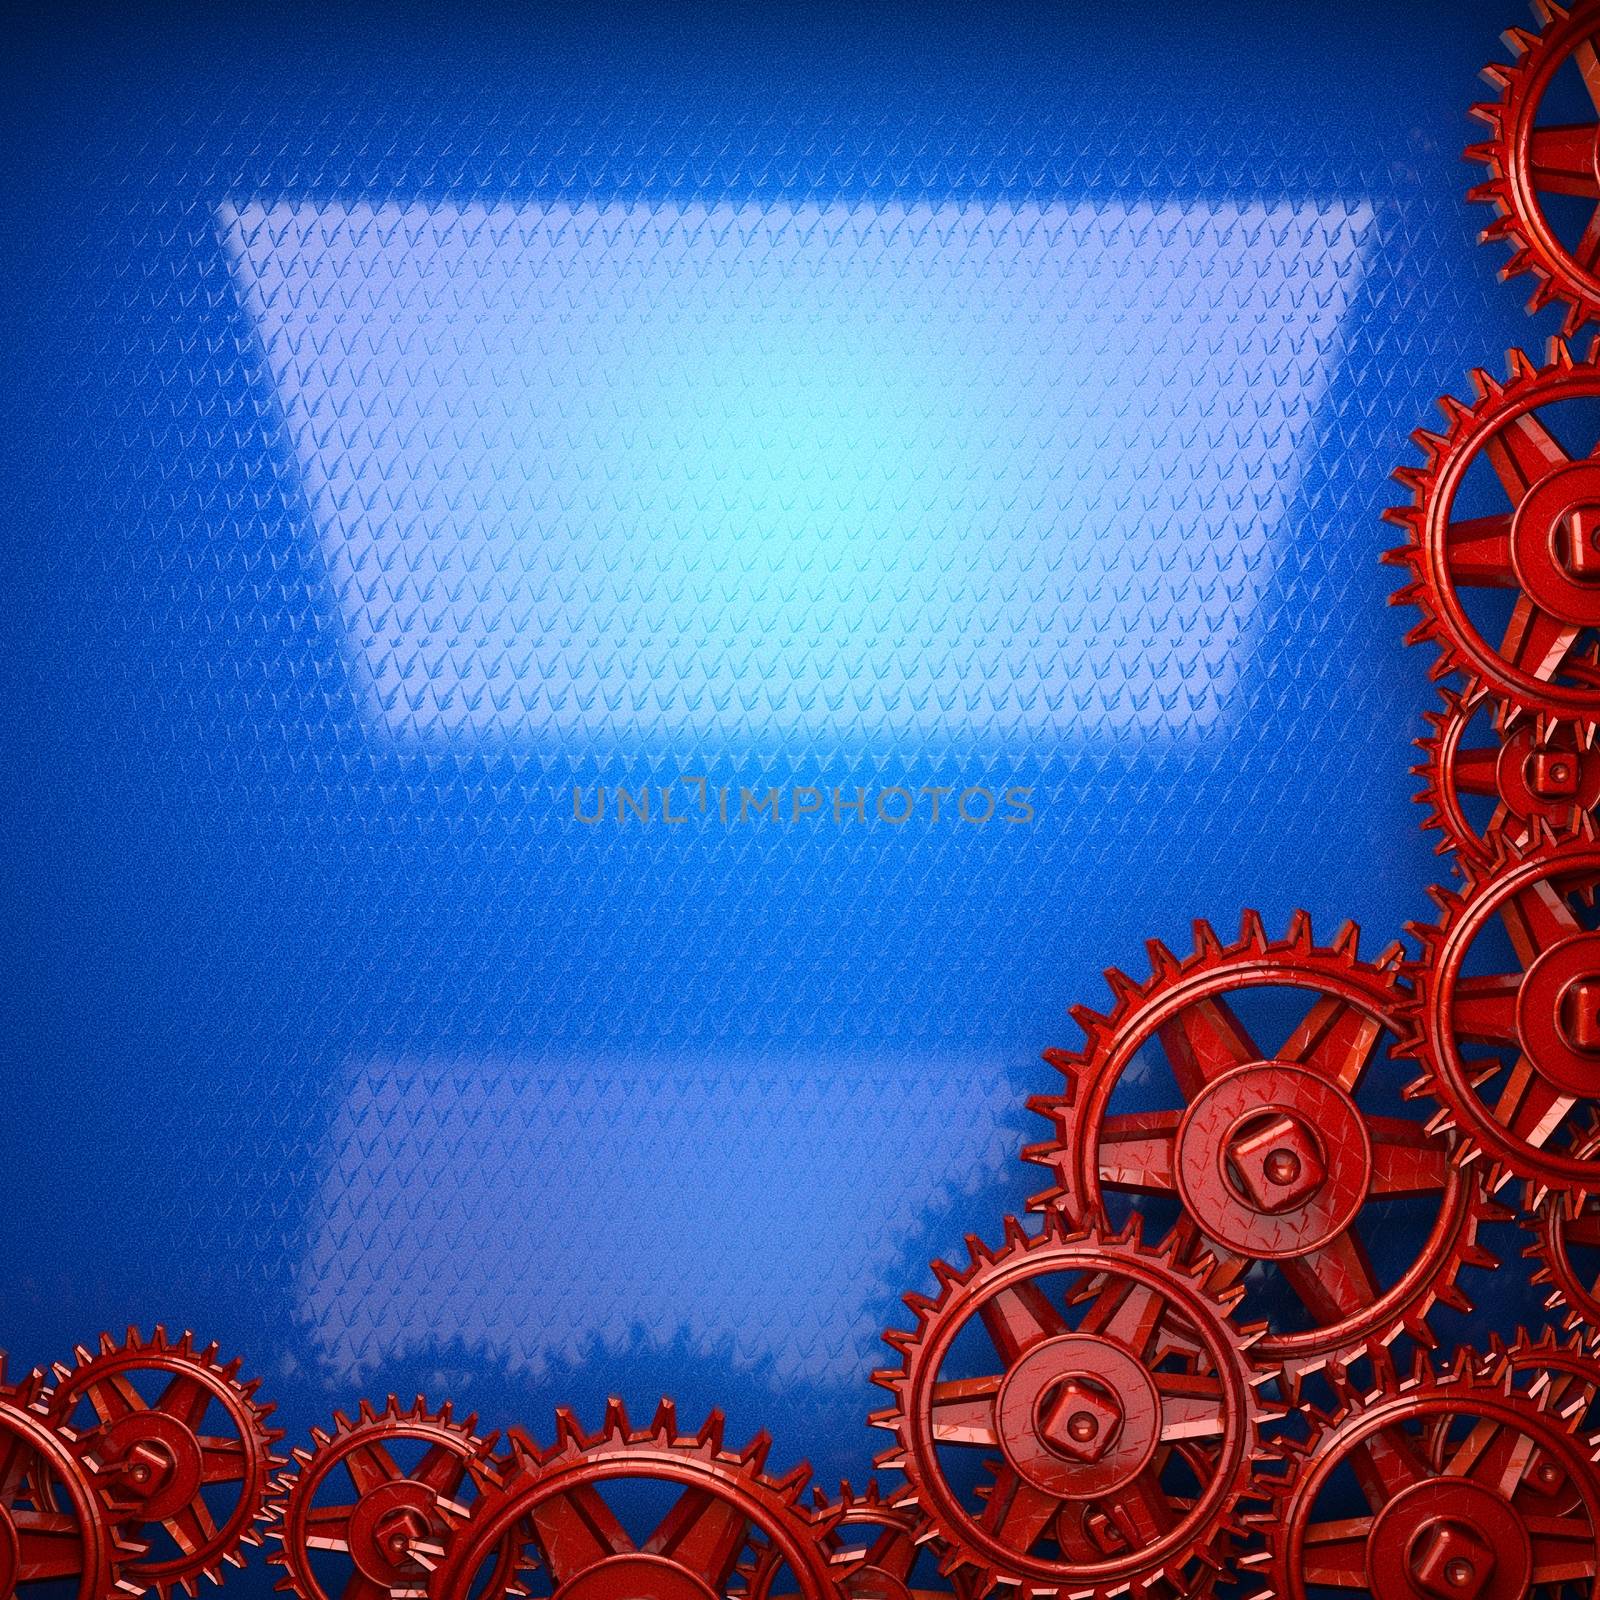 blue metal background with red cogwheel gears by videodoctor